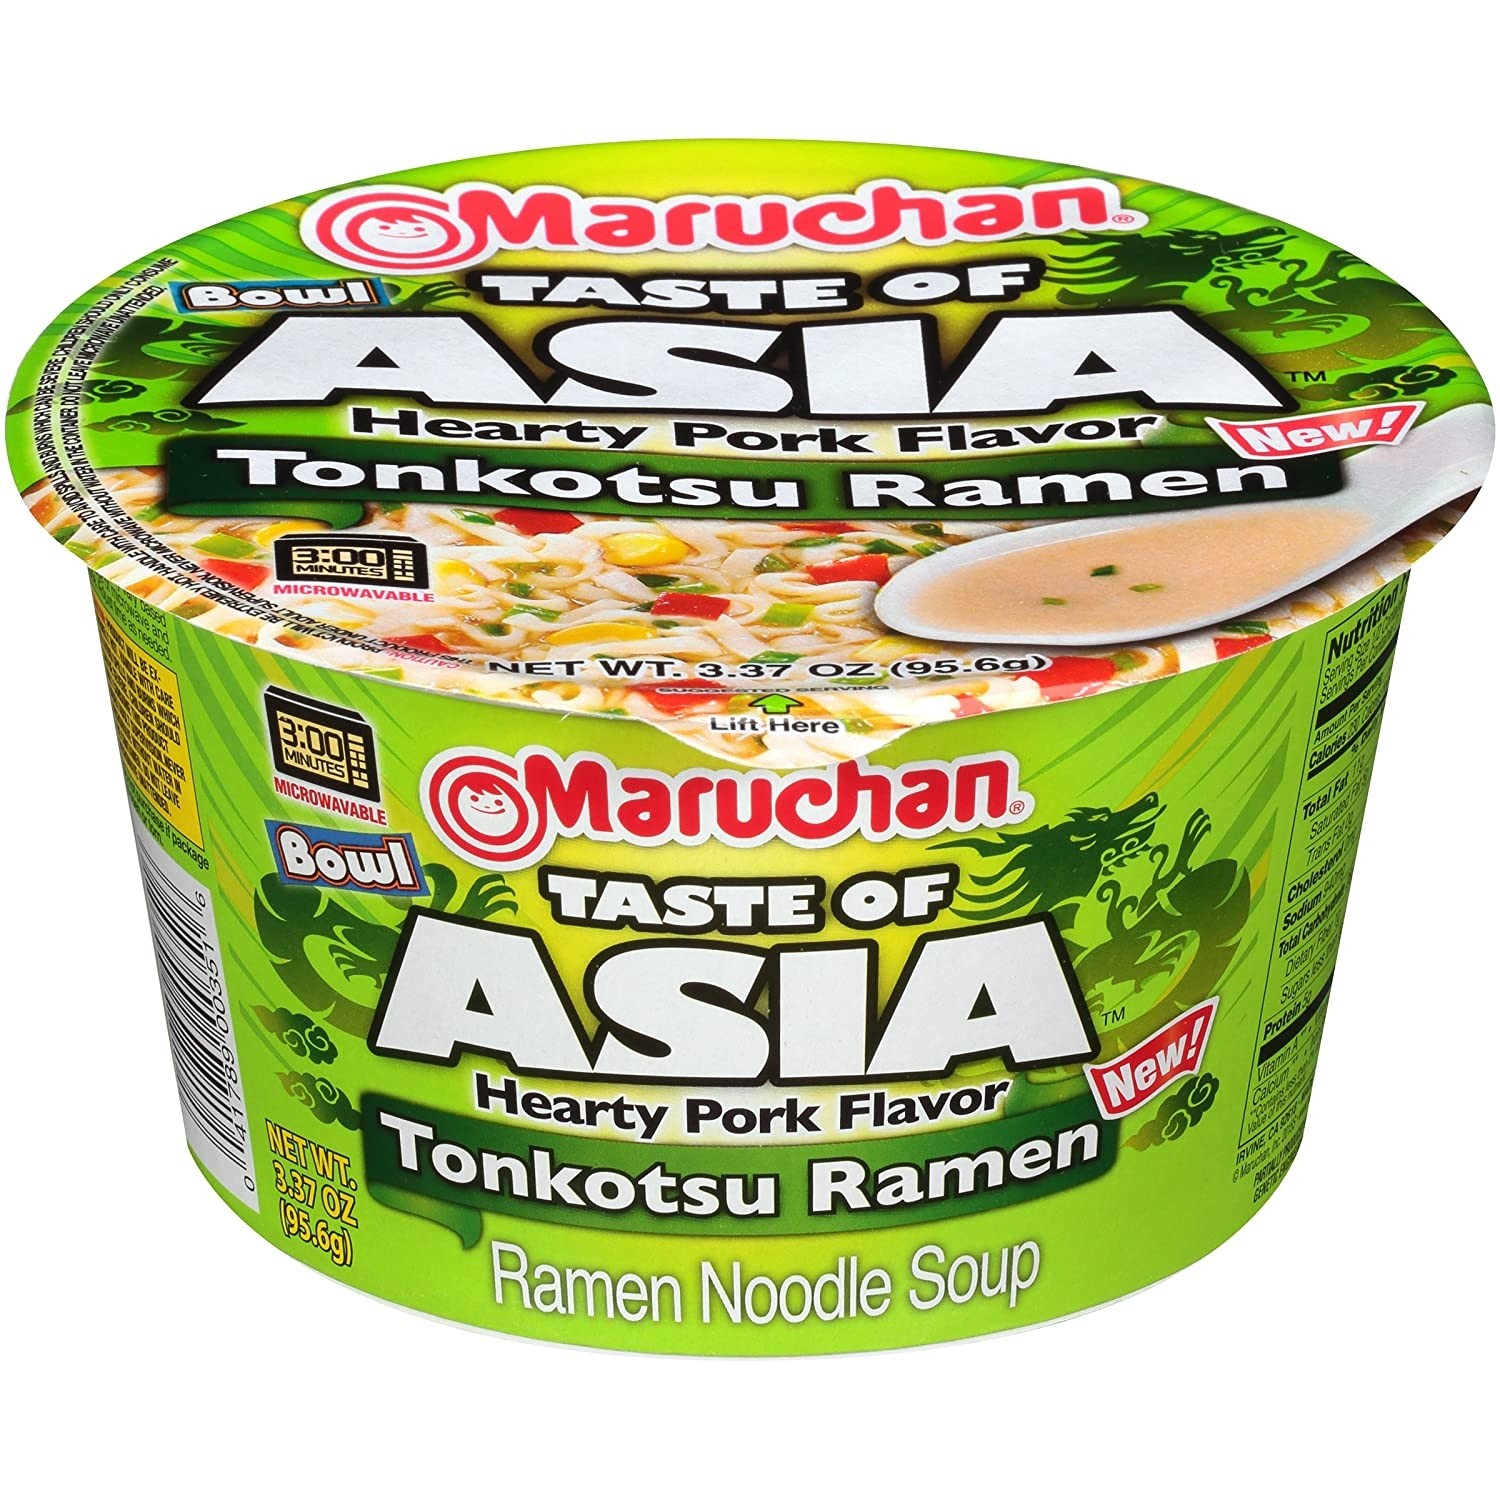 Maruchan Bowl Taste Of Asia Tonkotsu Ramen | Snackoree.com